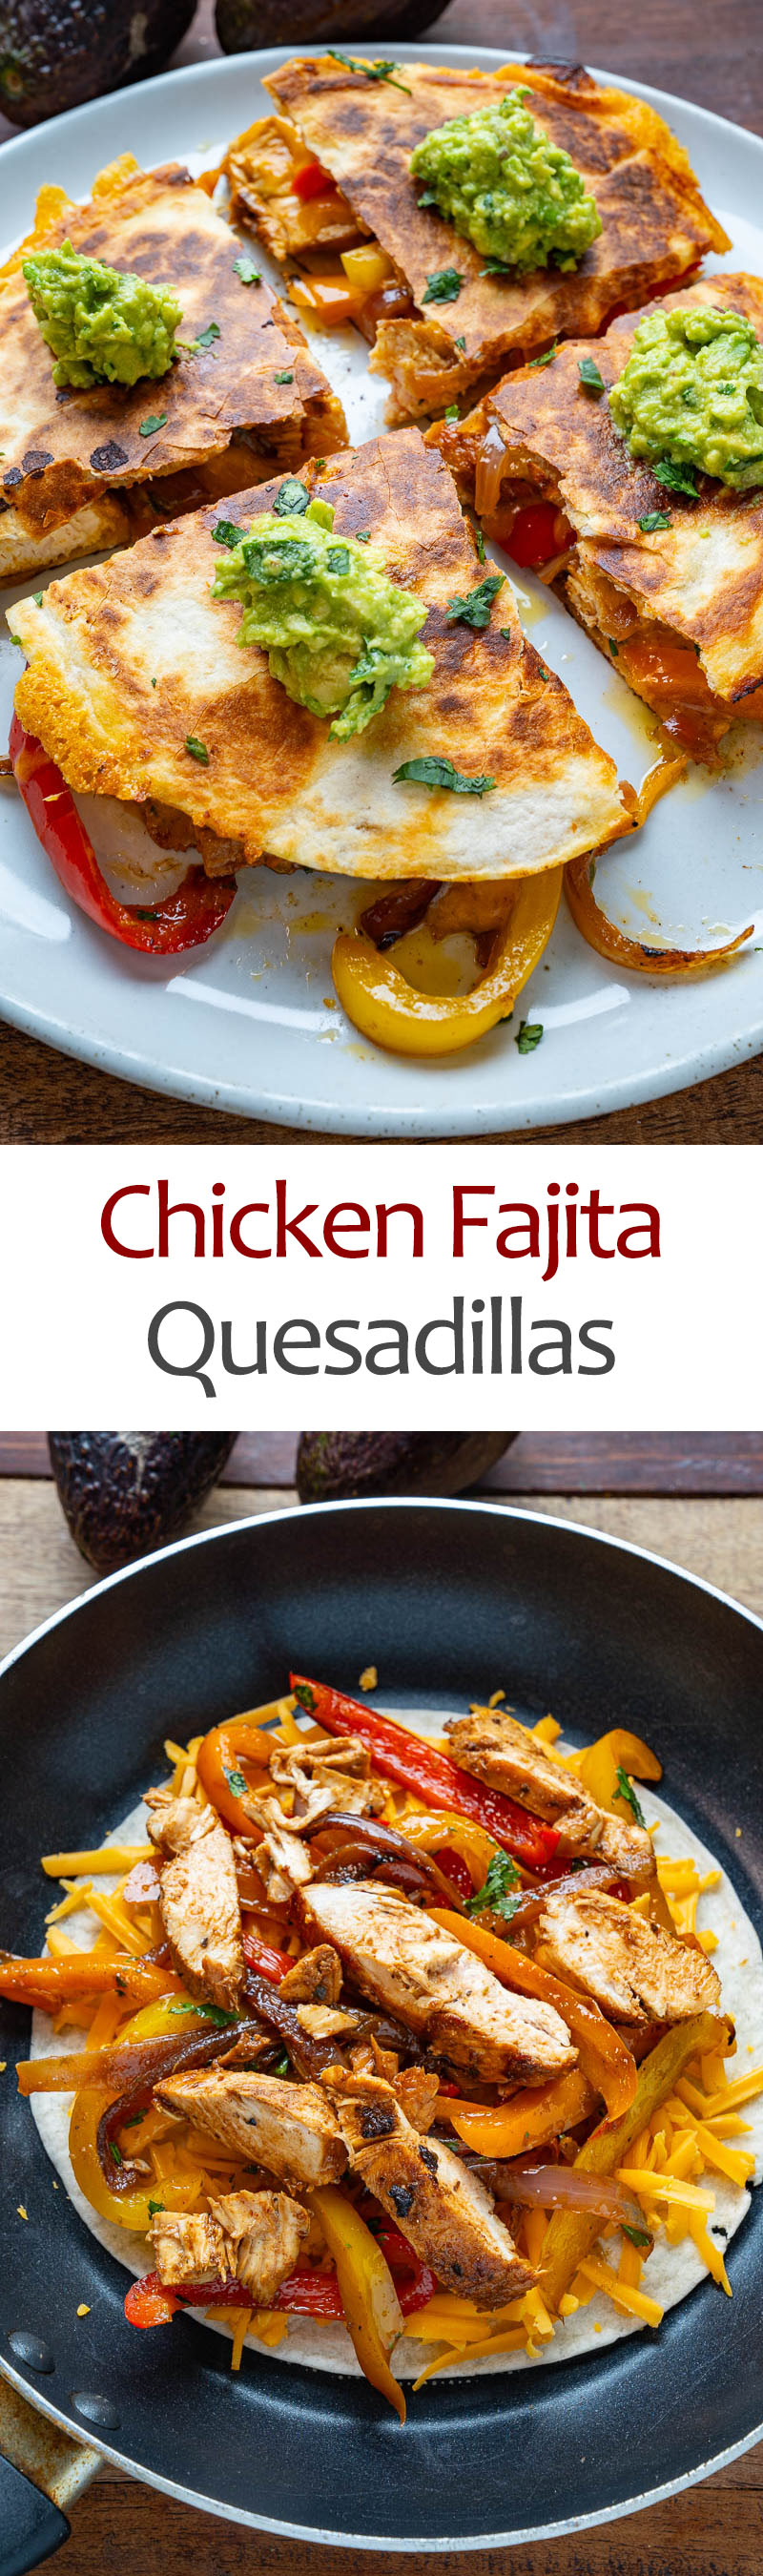 Chicken Fajita Quesadillas